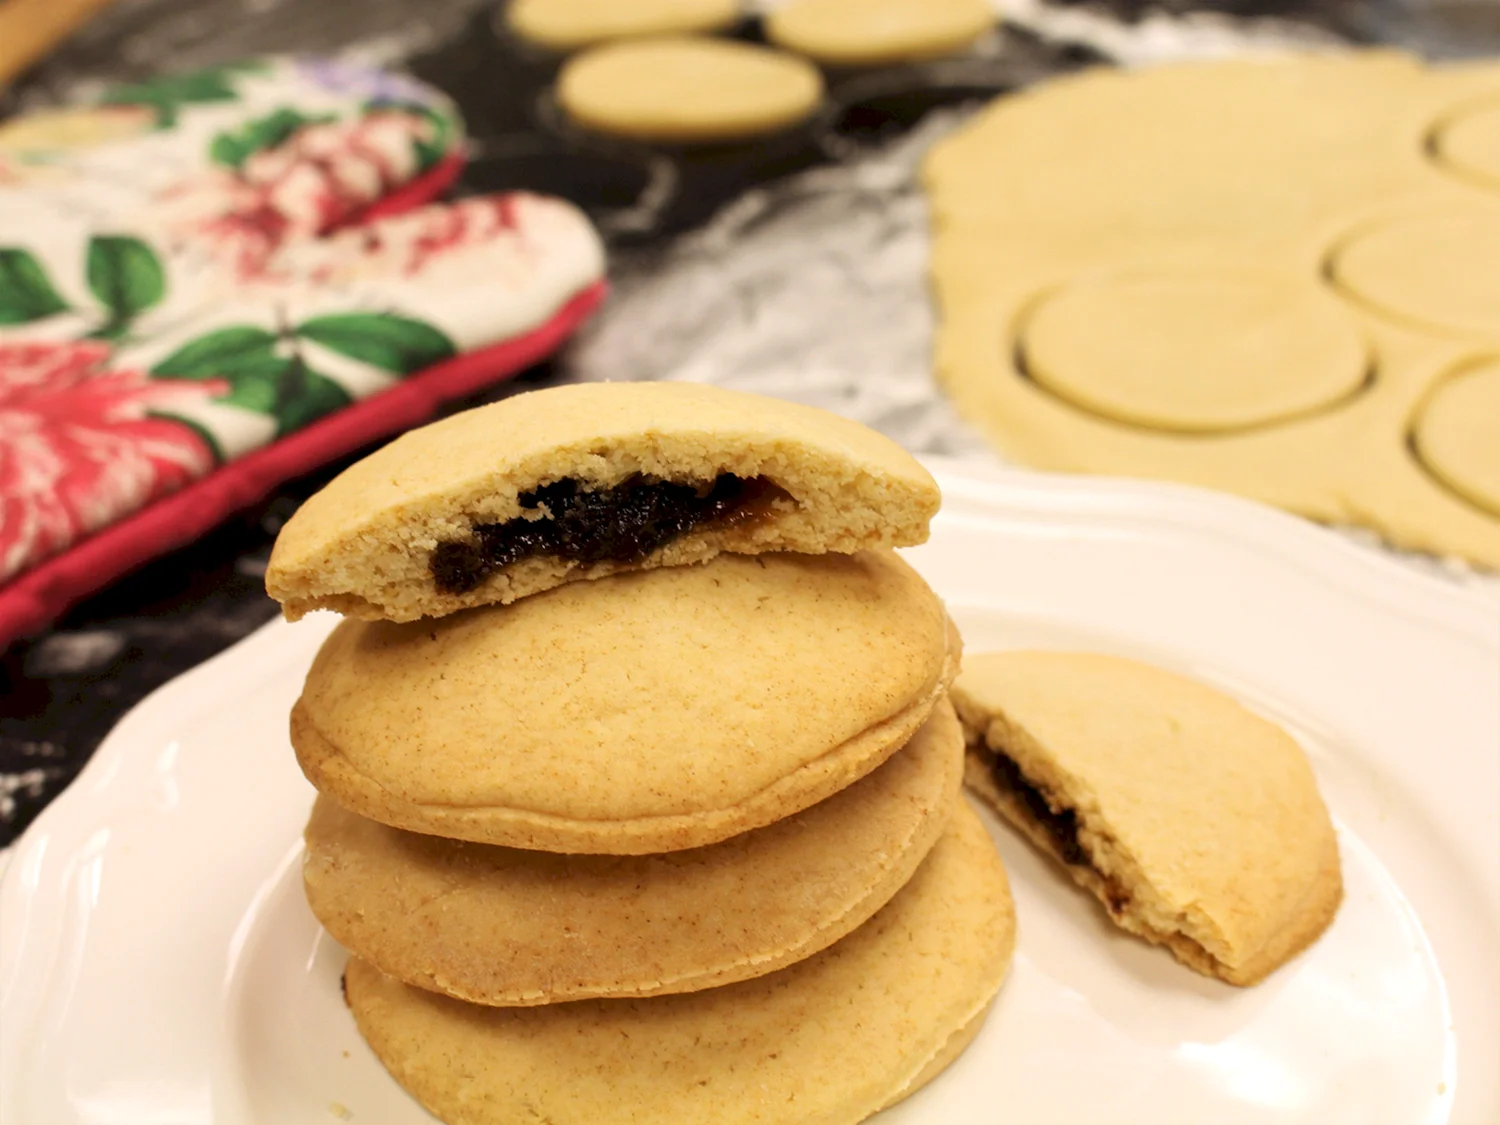 Black Raisin cookie and Vanilla cookie